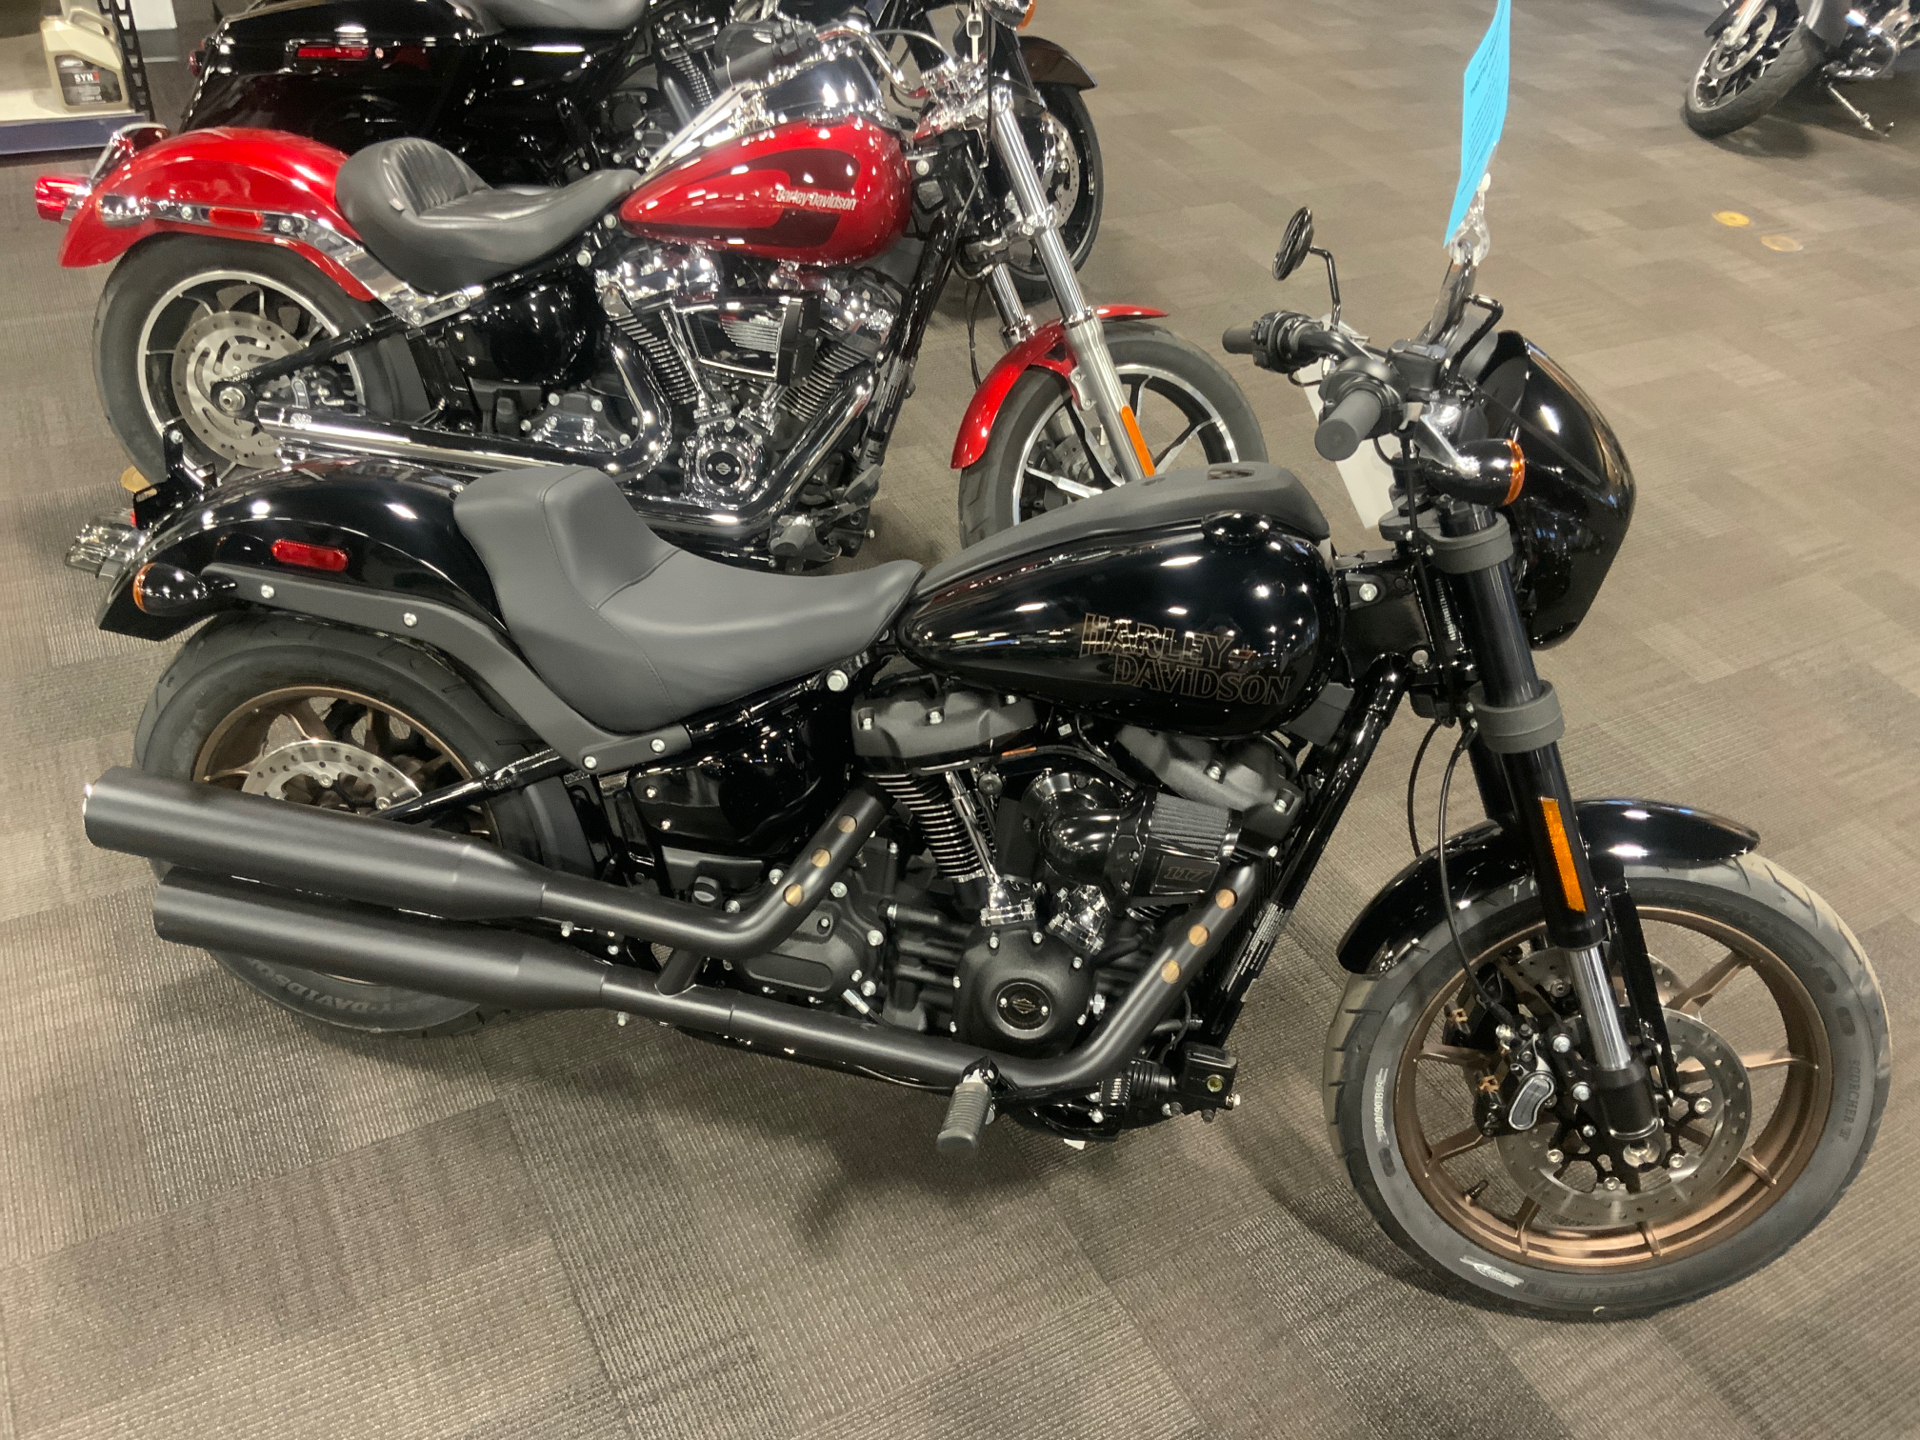 2022 Harley-Davidson Low Rider® S in Fairbanks, Alaska - Photo 1